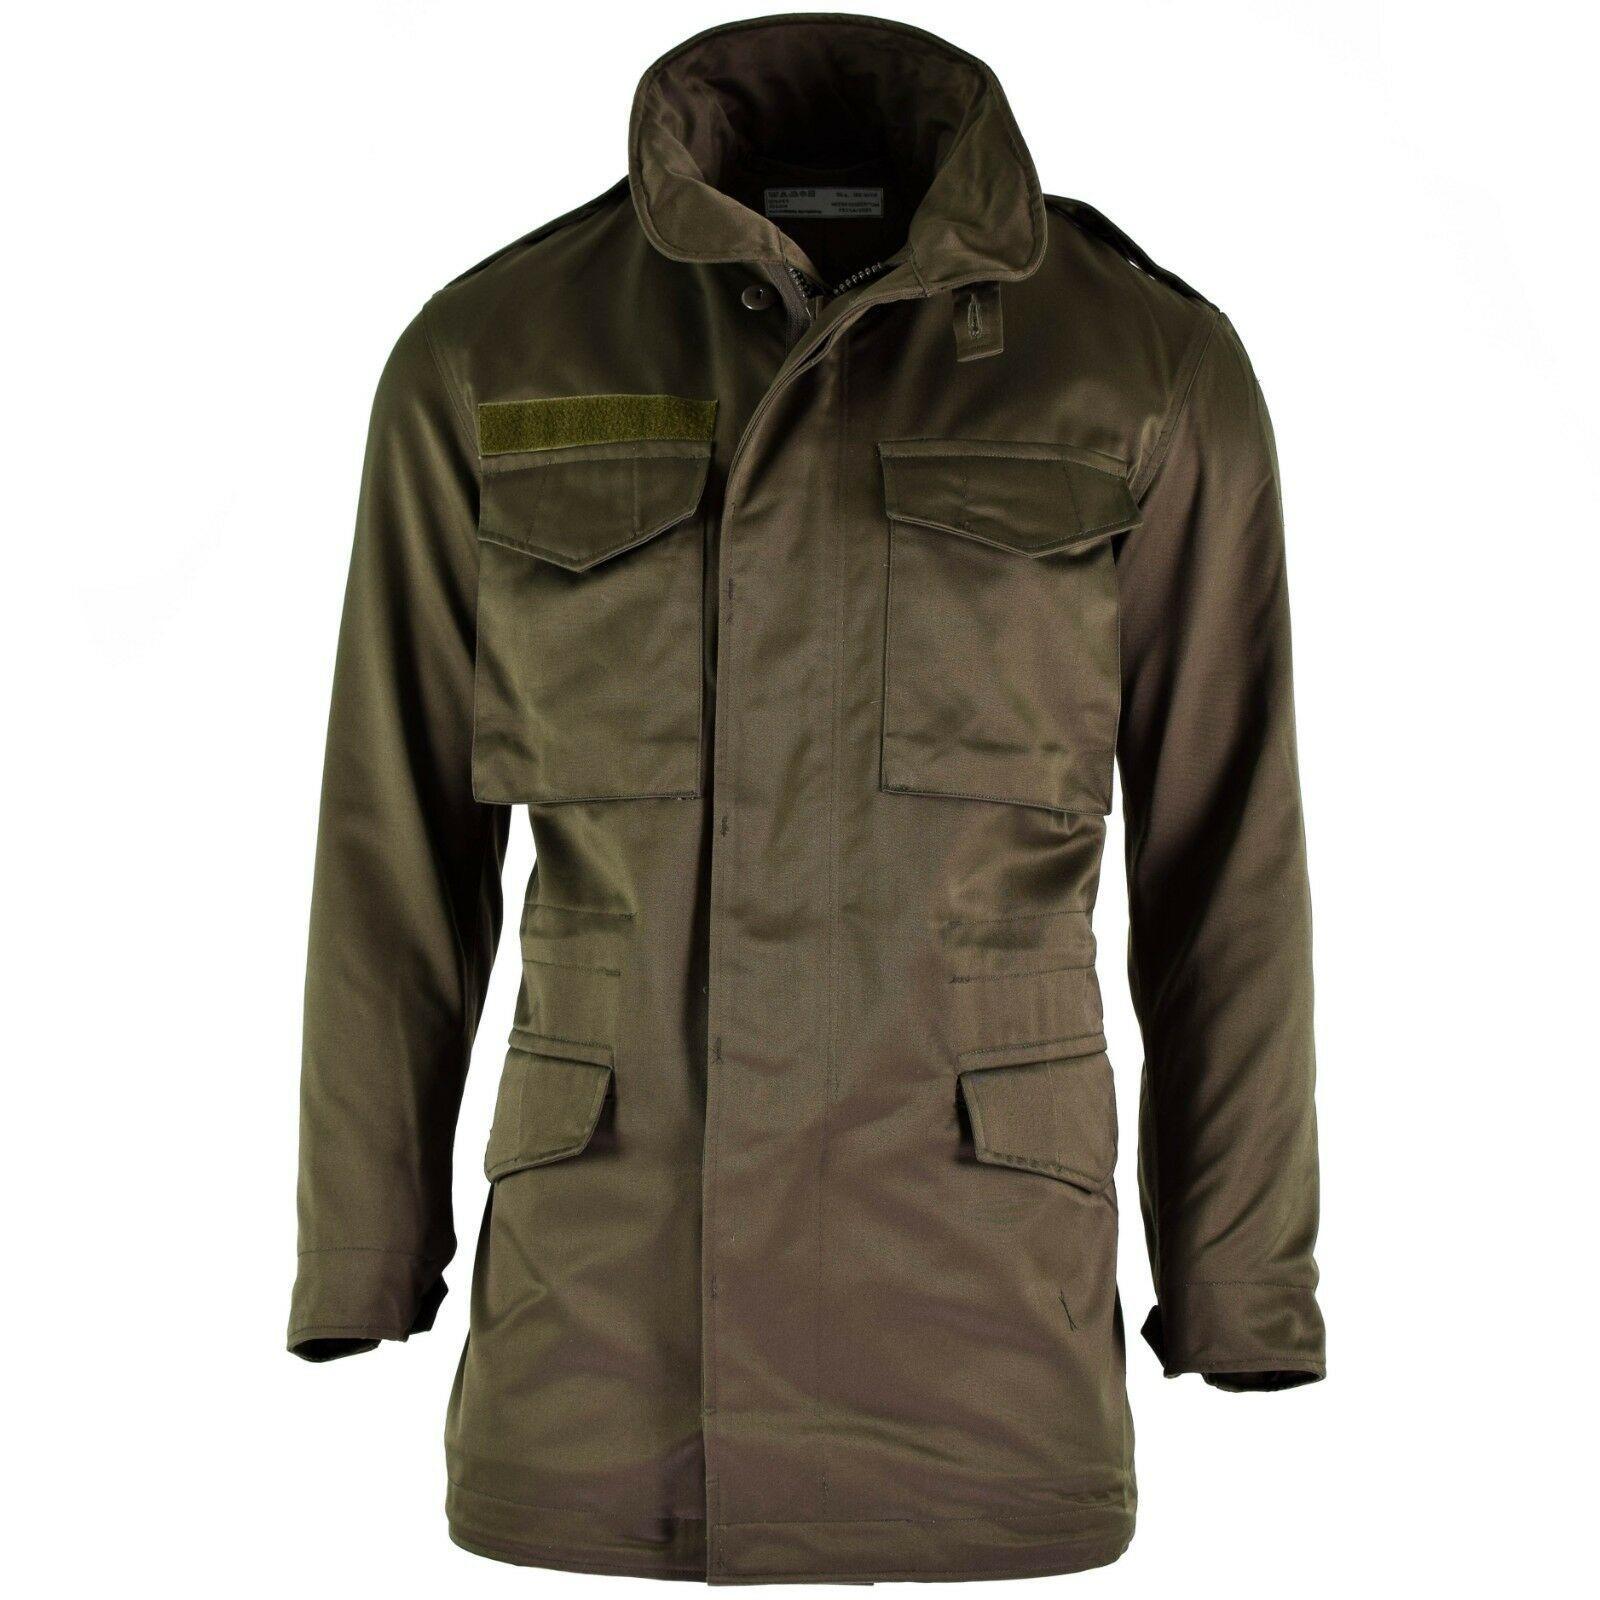 M65 Style Military Jacket